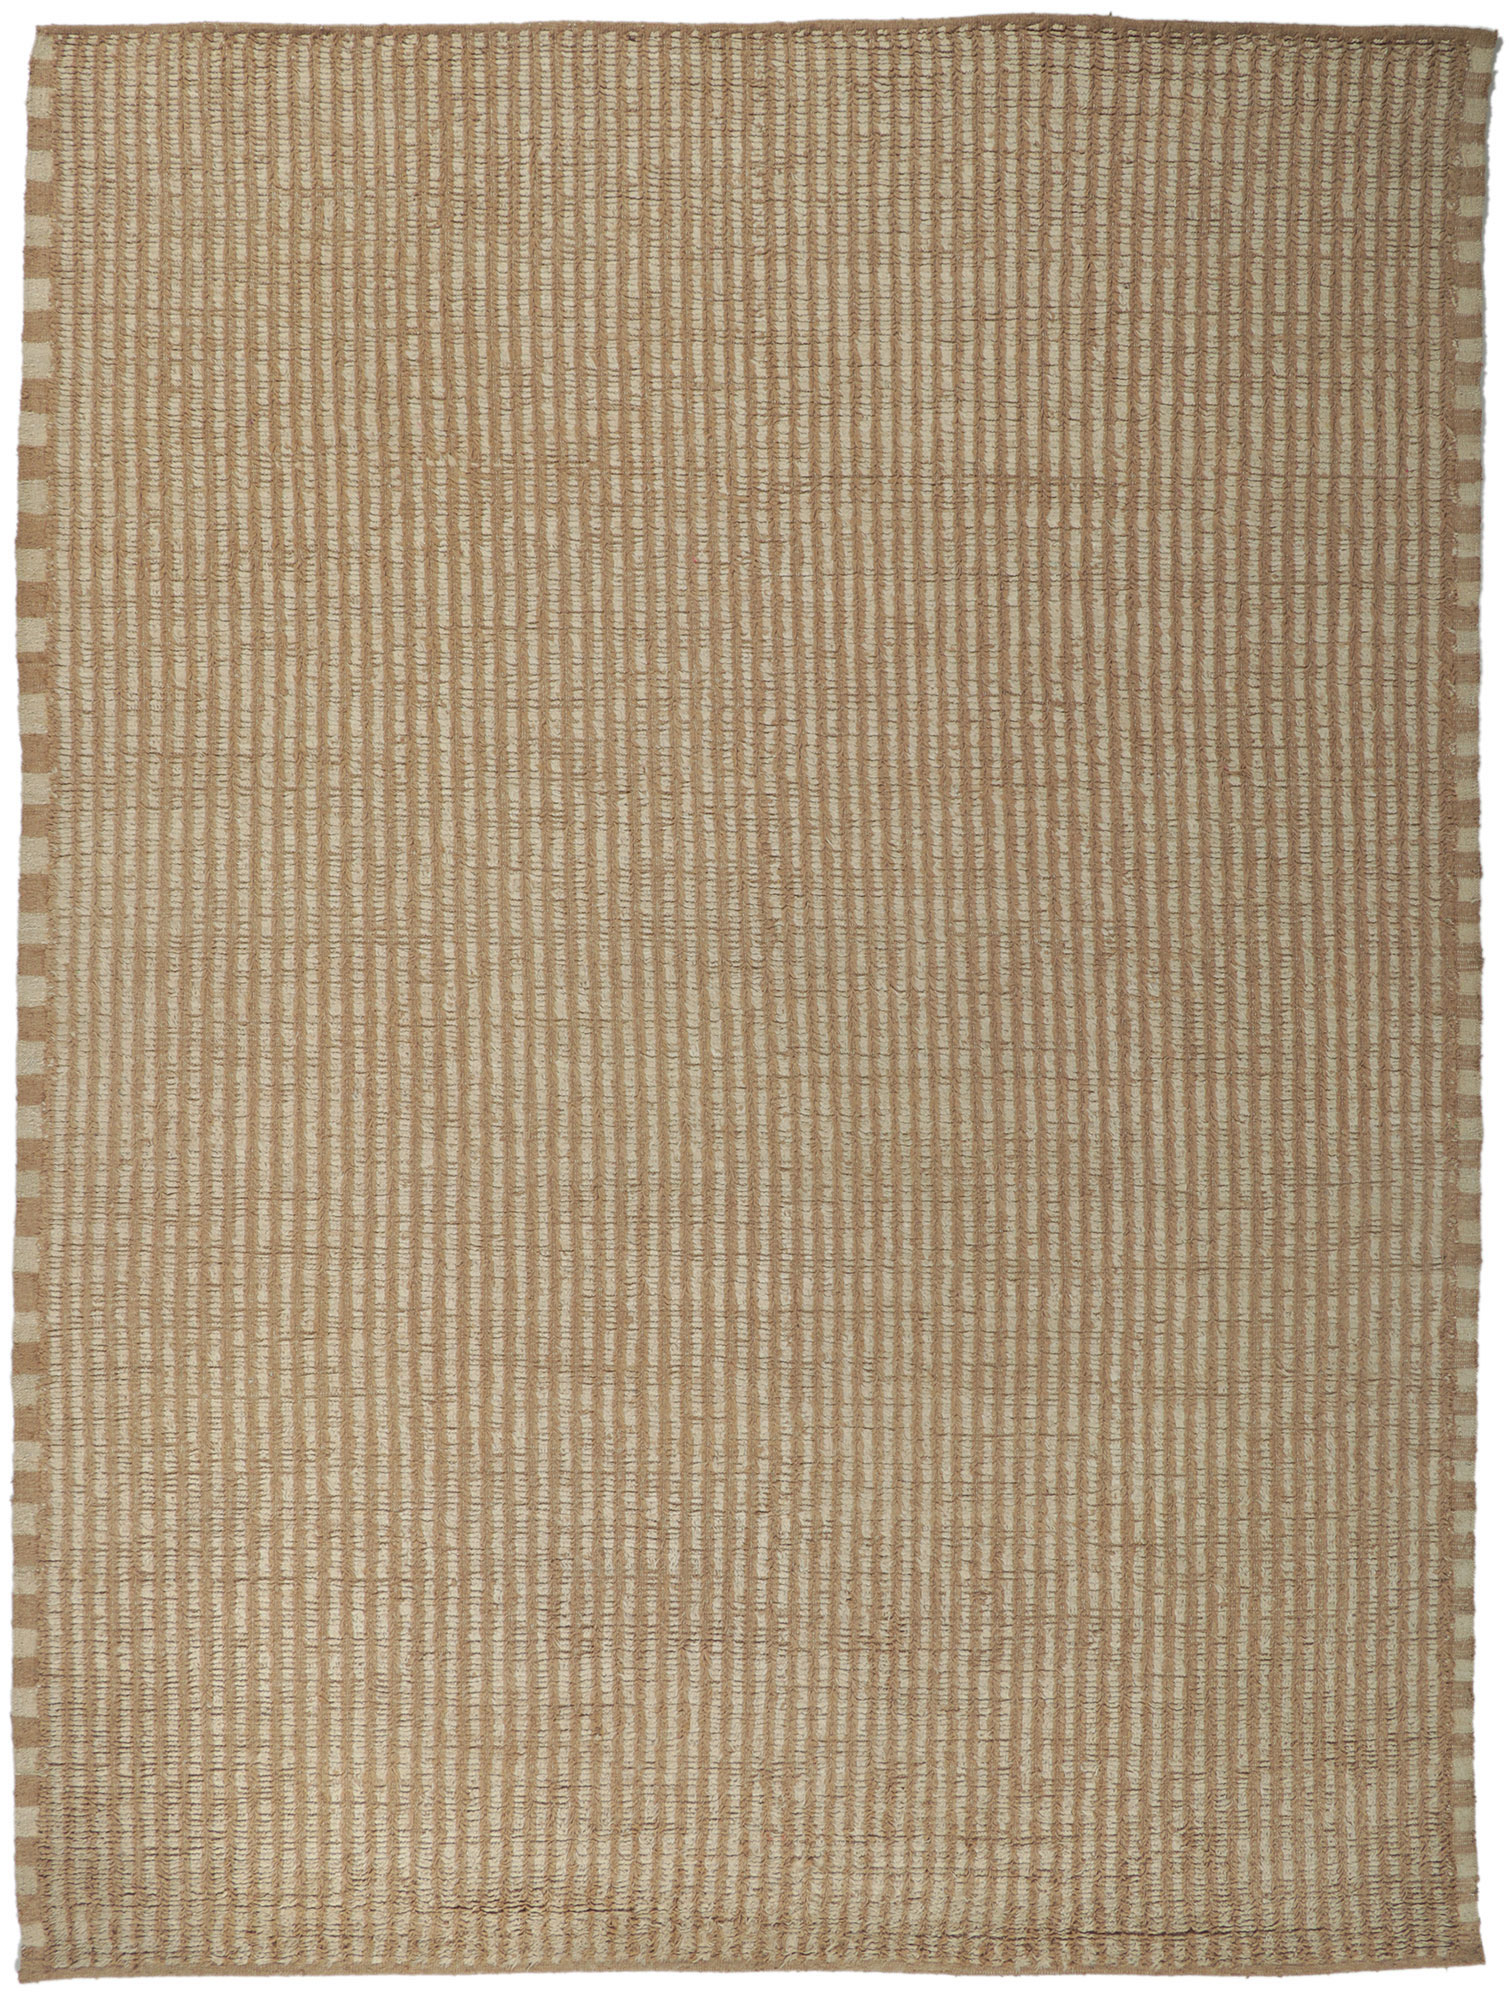 Natural Moroccan Rug, 9'00 x 12'00